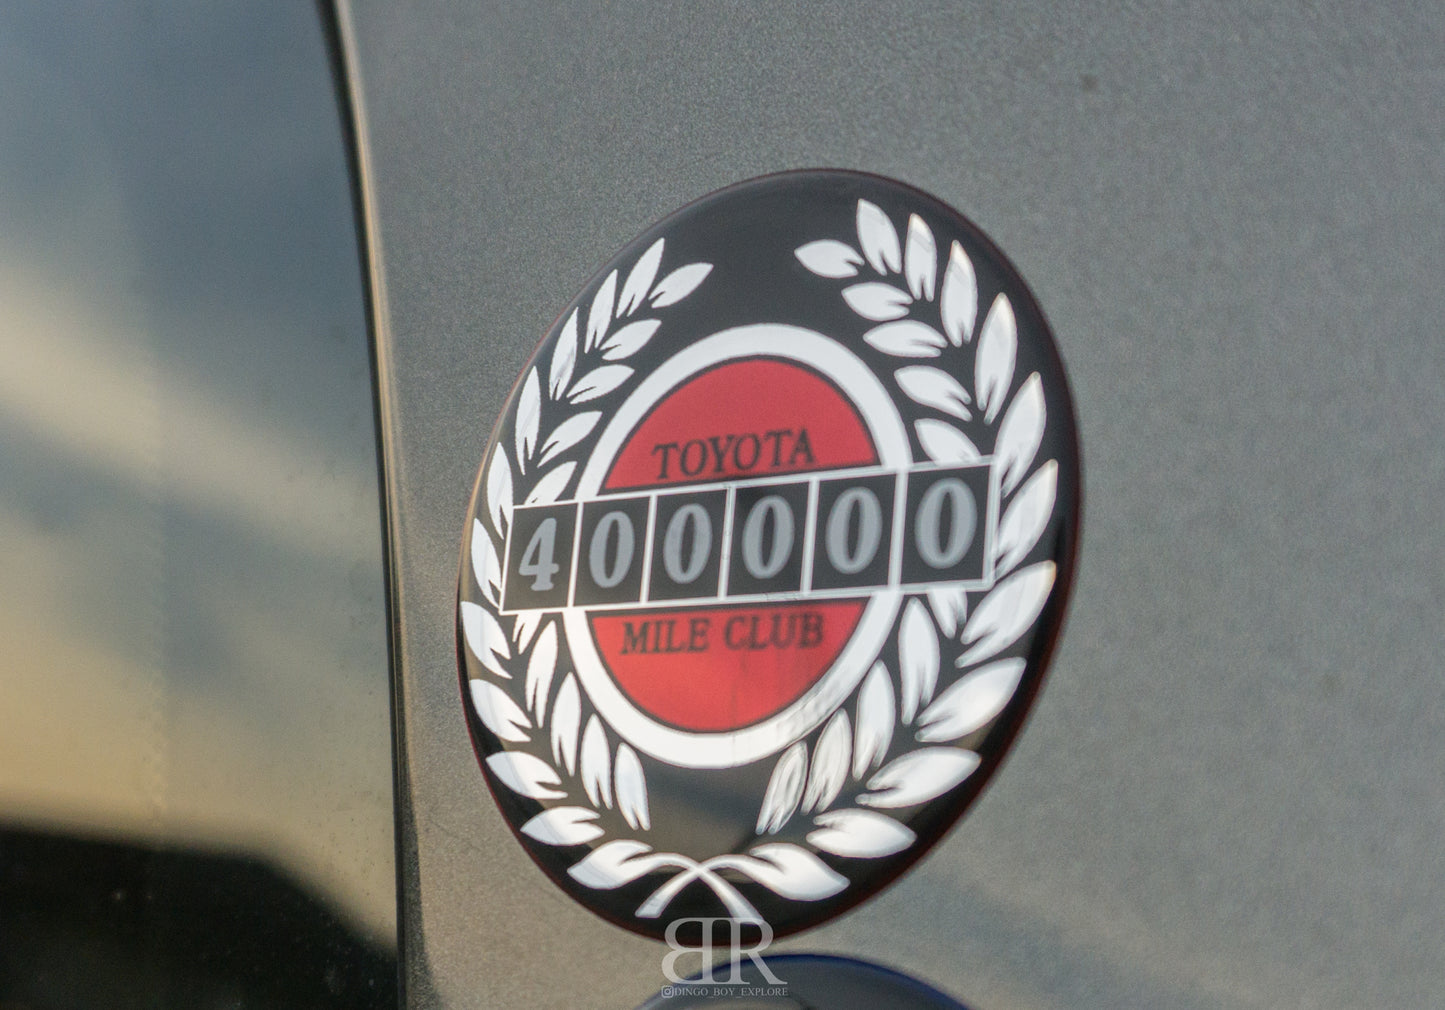 Toyota High Mileage Badge